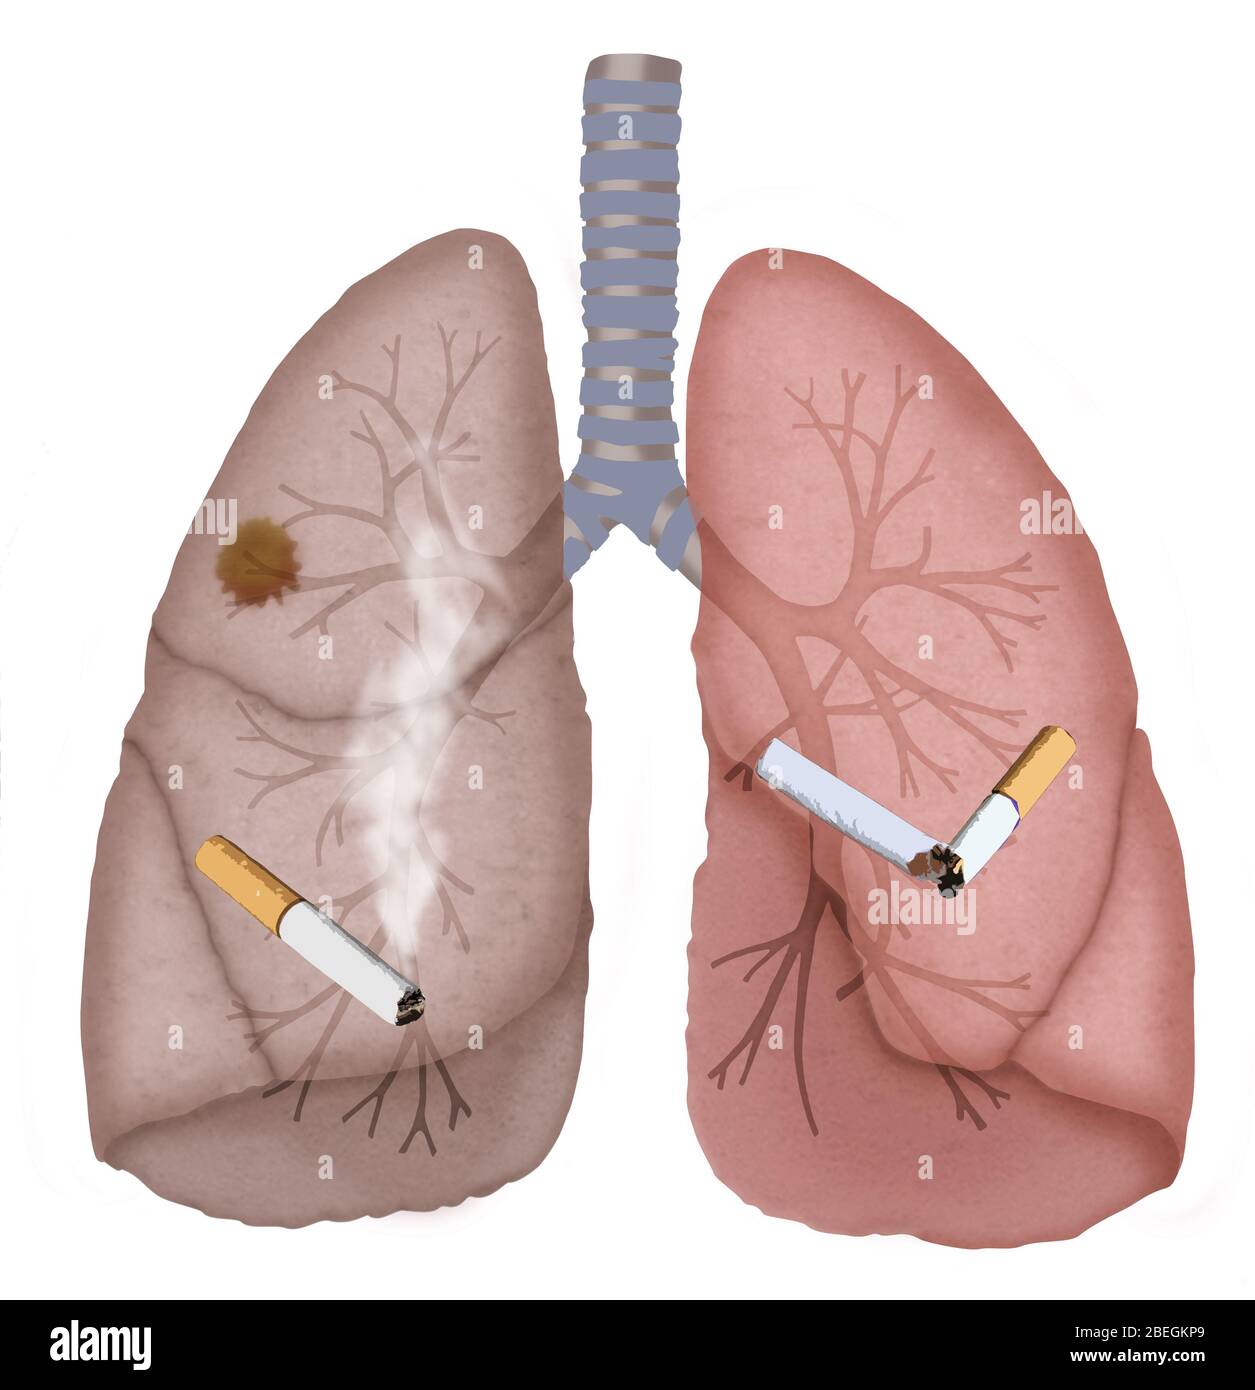 Polmoni Sani E Fumatori Immagini e Fotos Stock - Alamy